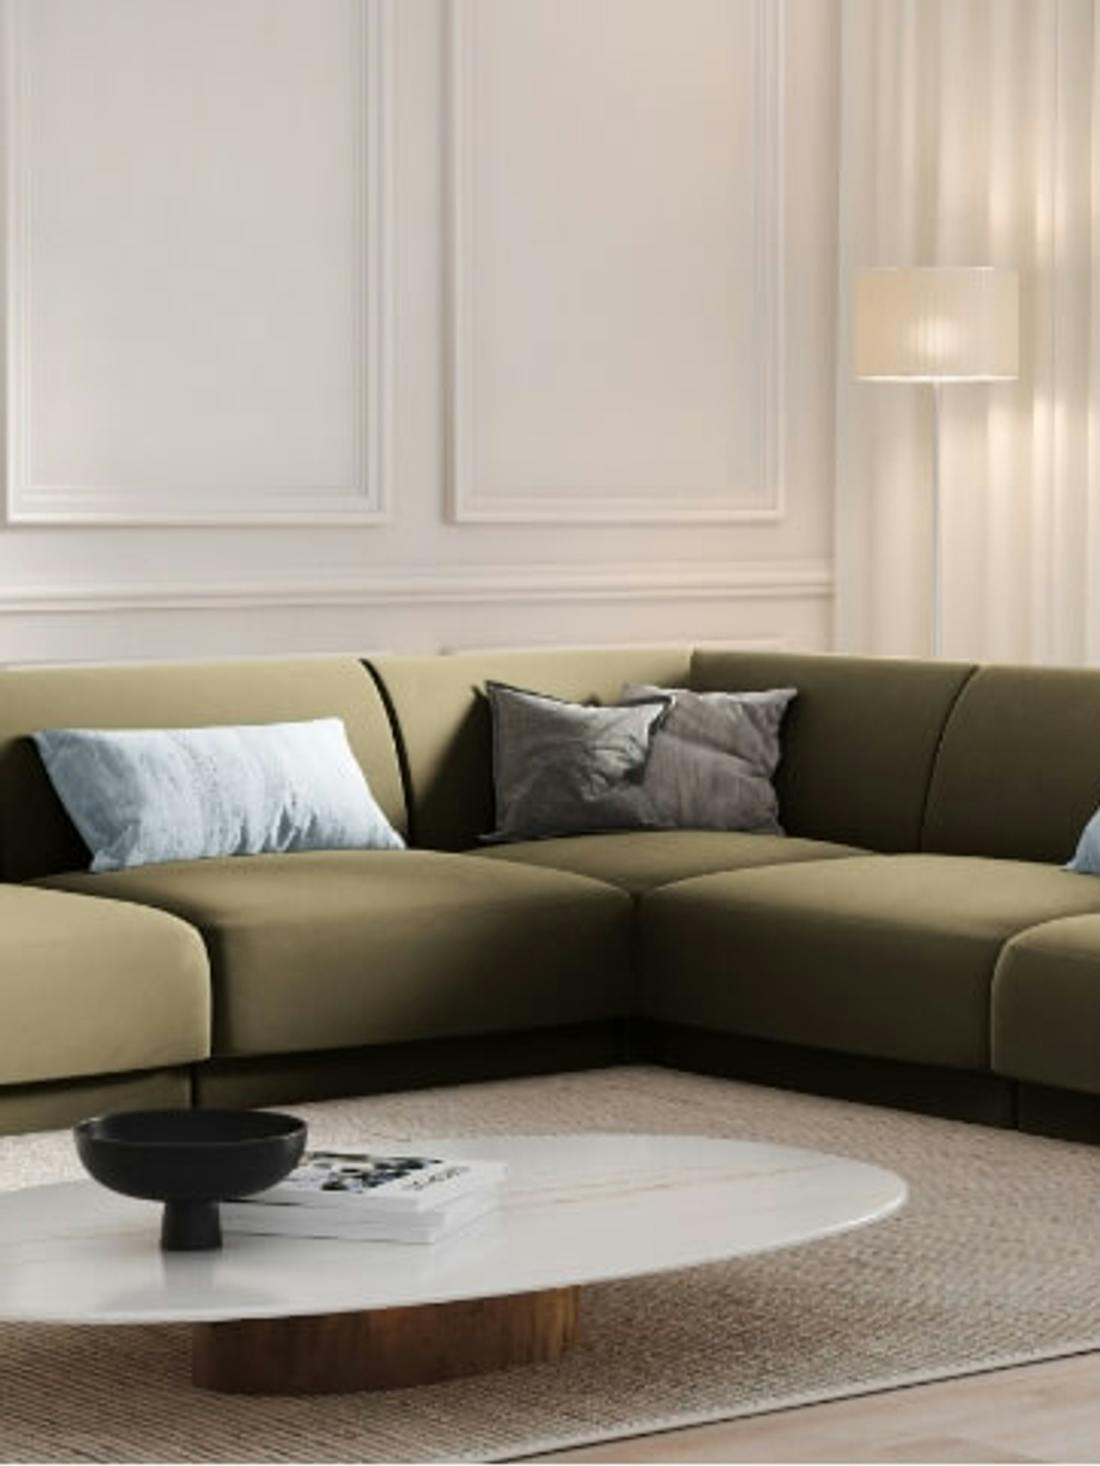 corner-sofa-in-olive-colors-set-in-a-parisian-living-room